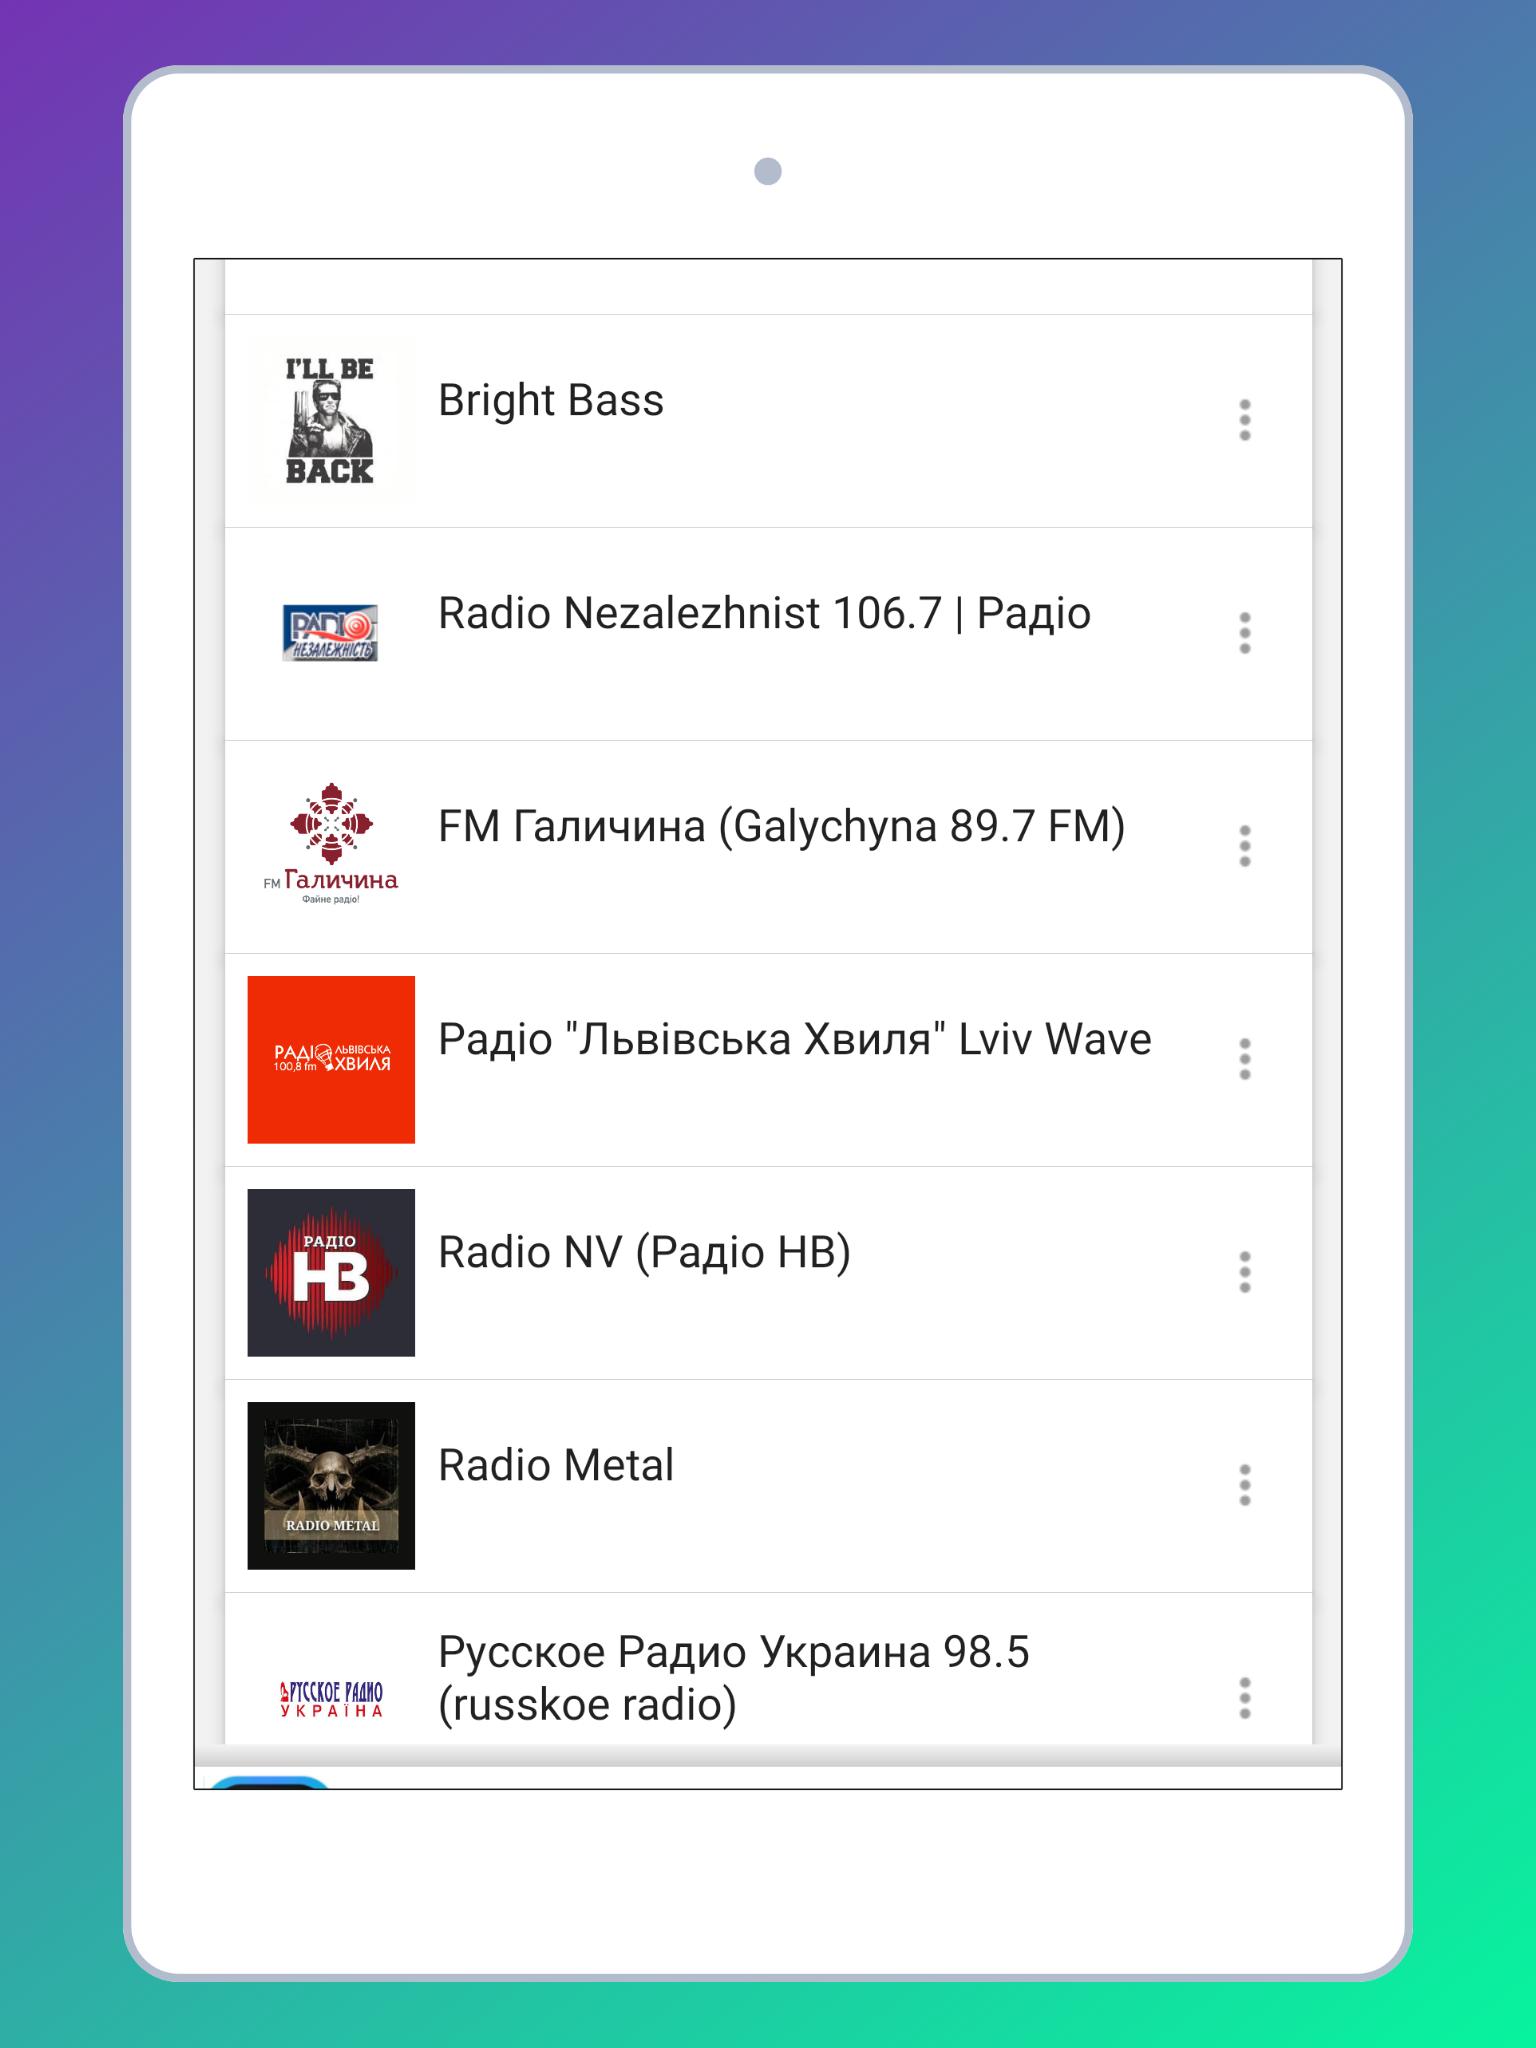 Radio Ukraine: AM FM Stations - Free Online Radio for Android - APK Download